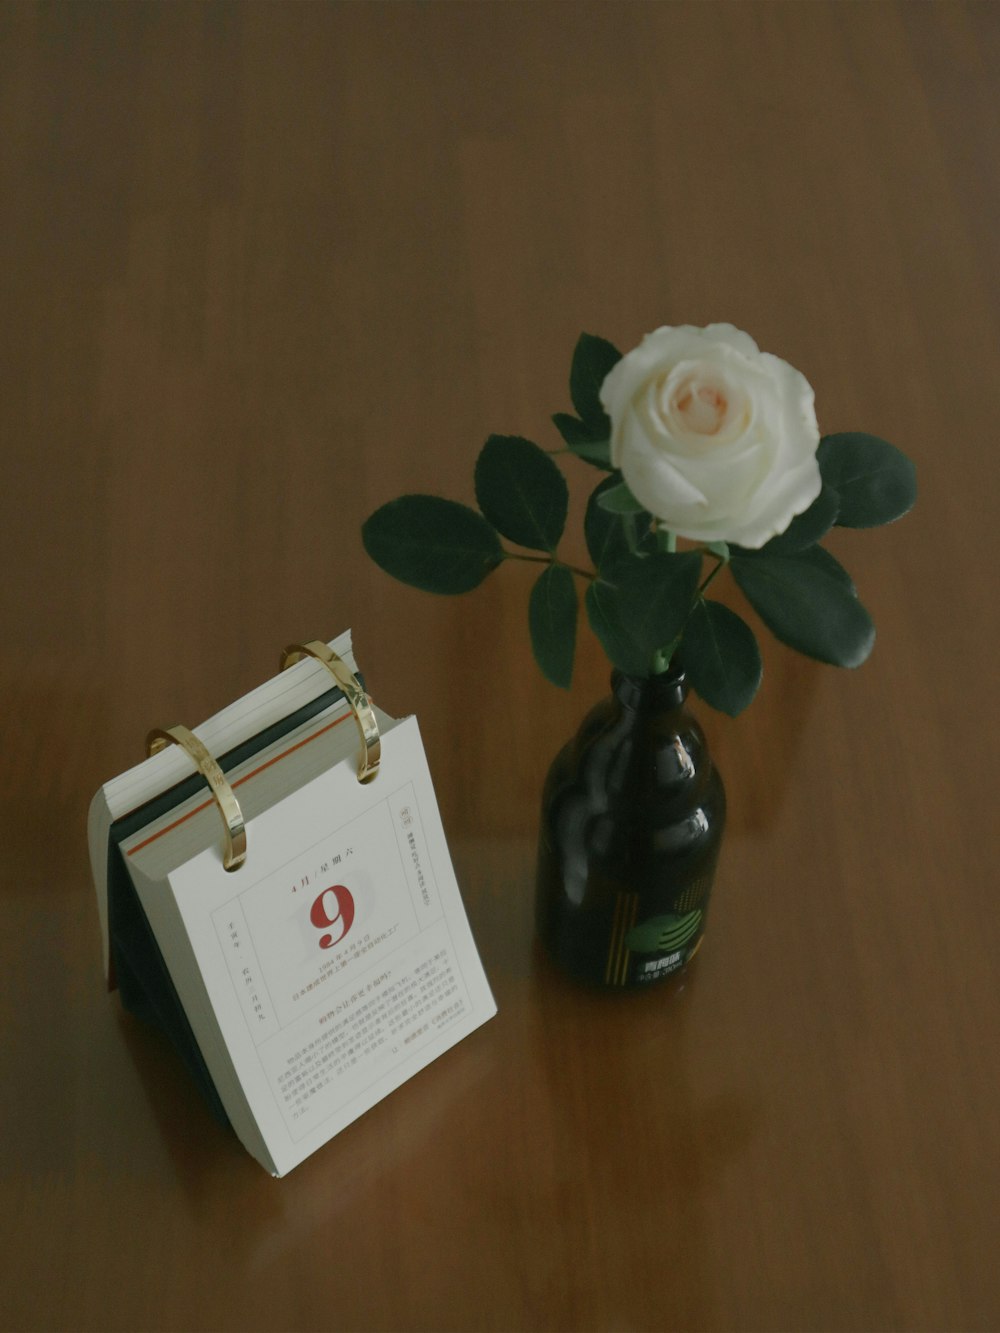 a white rose in a vase next to a calendar